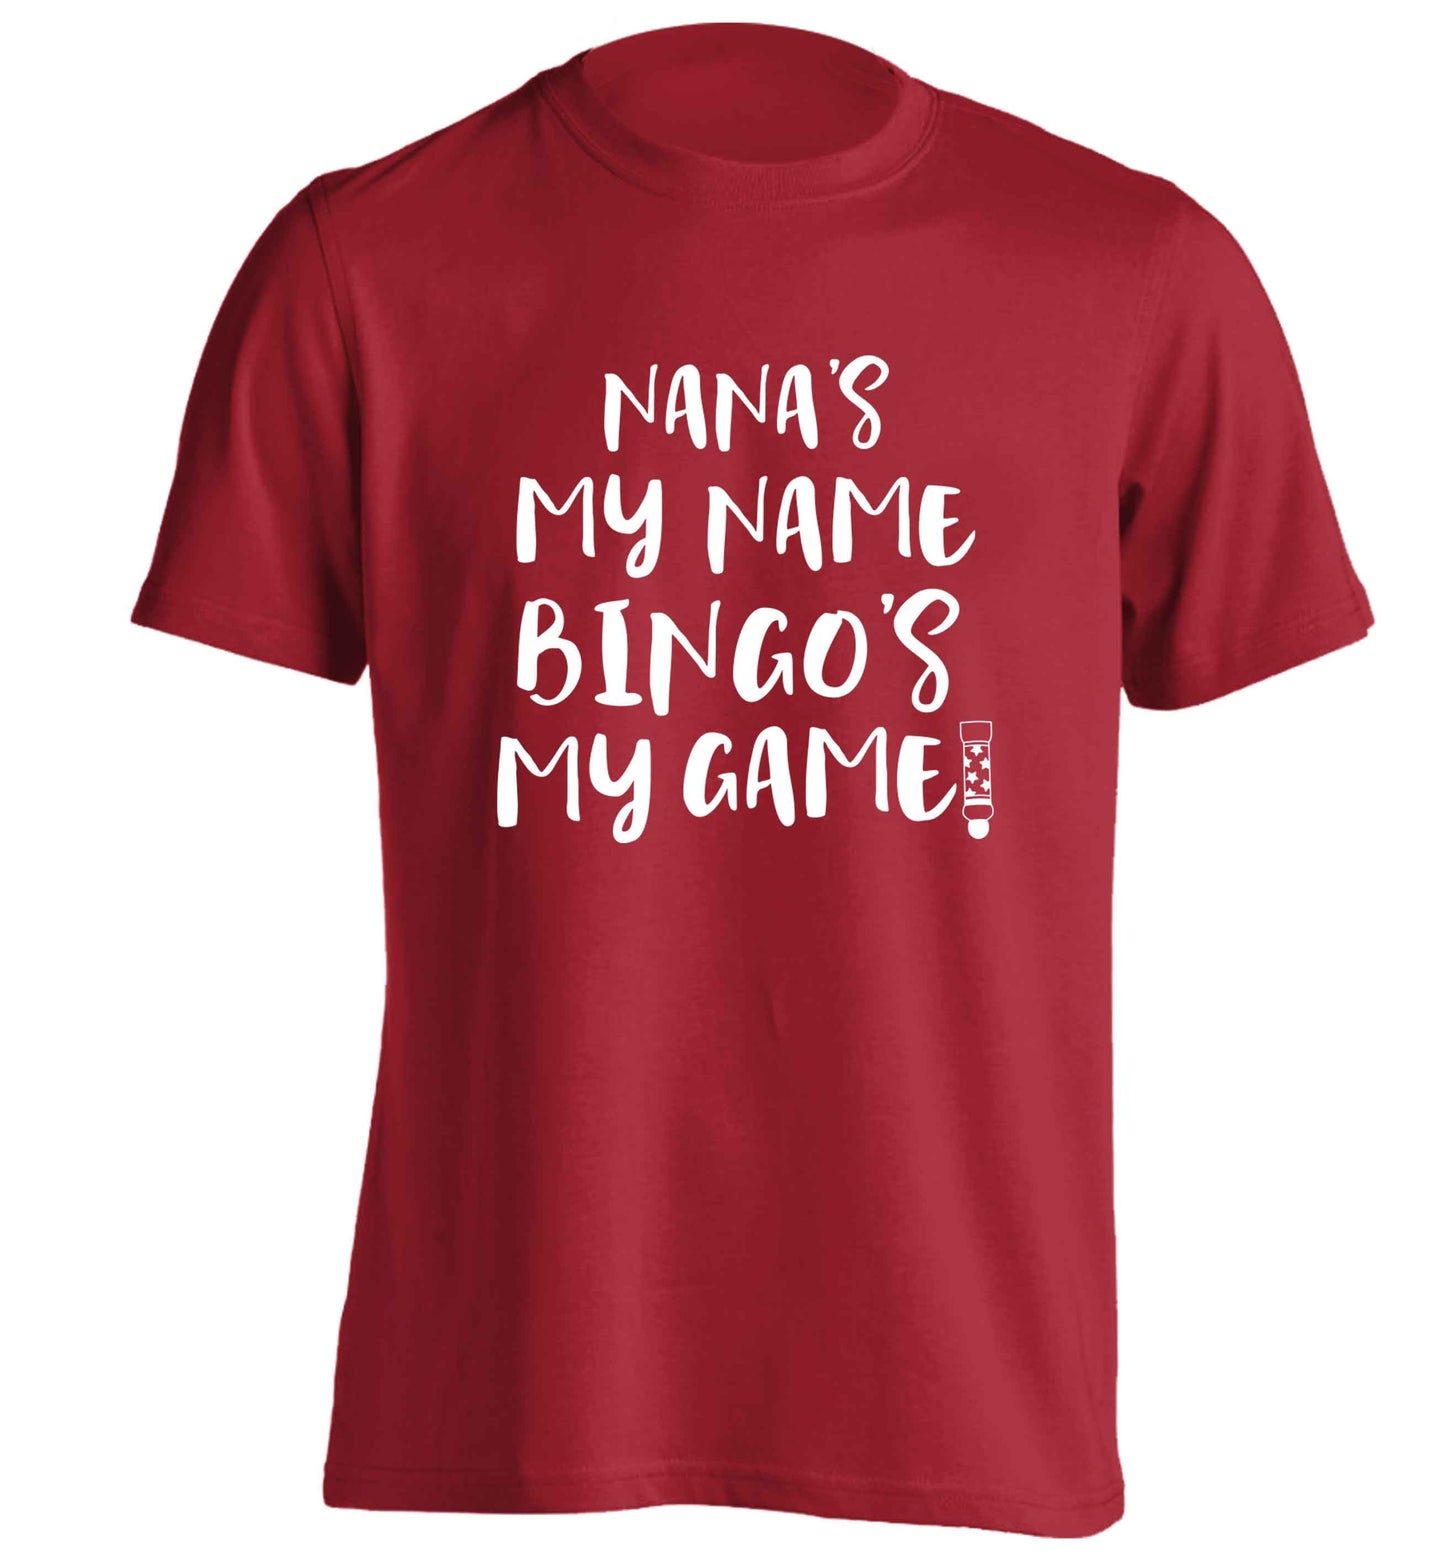 Nana's my name bingo's my game! adults unisex red Tshirt 2XL